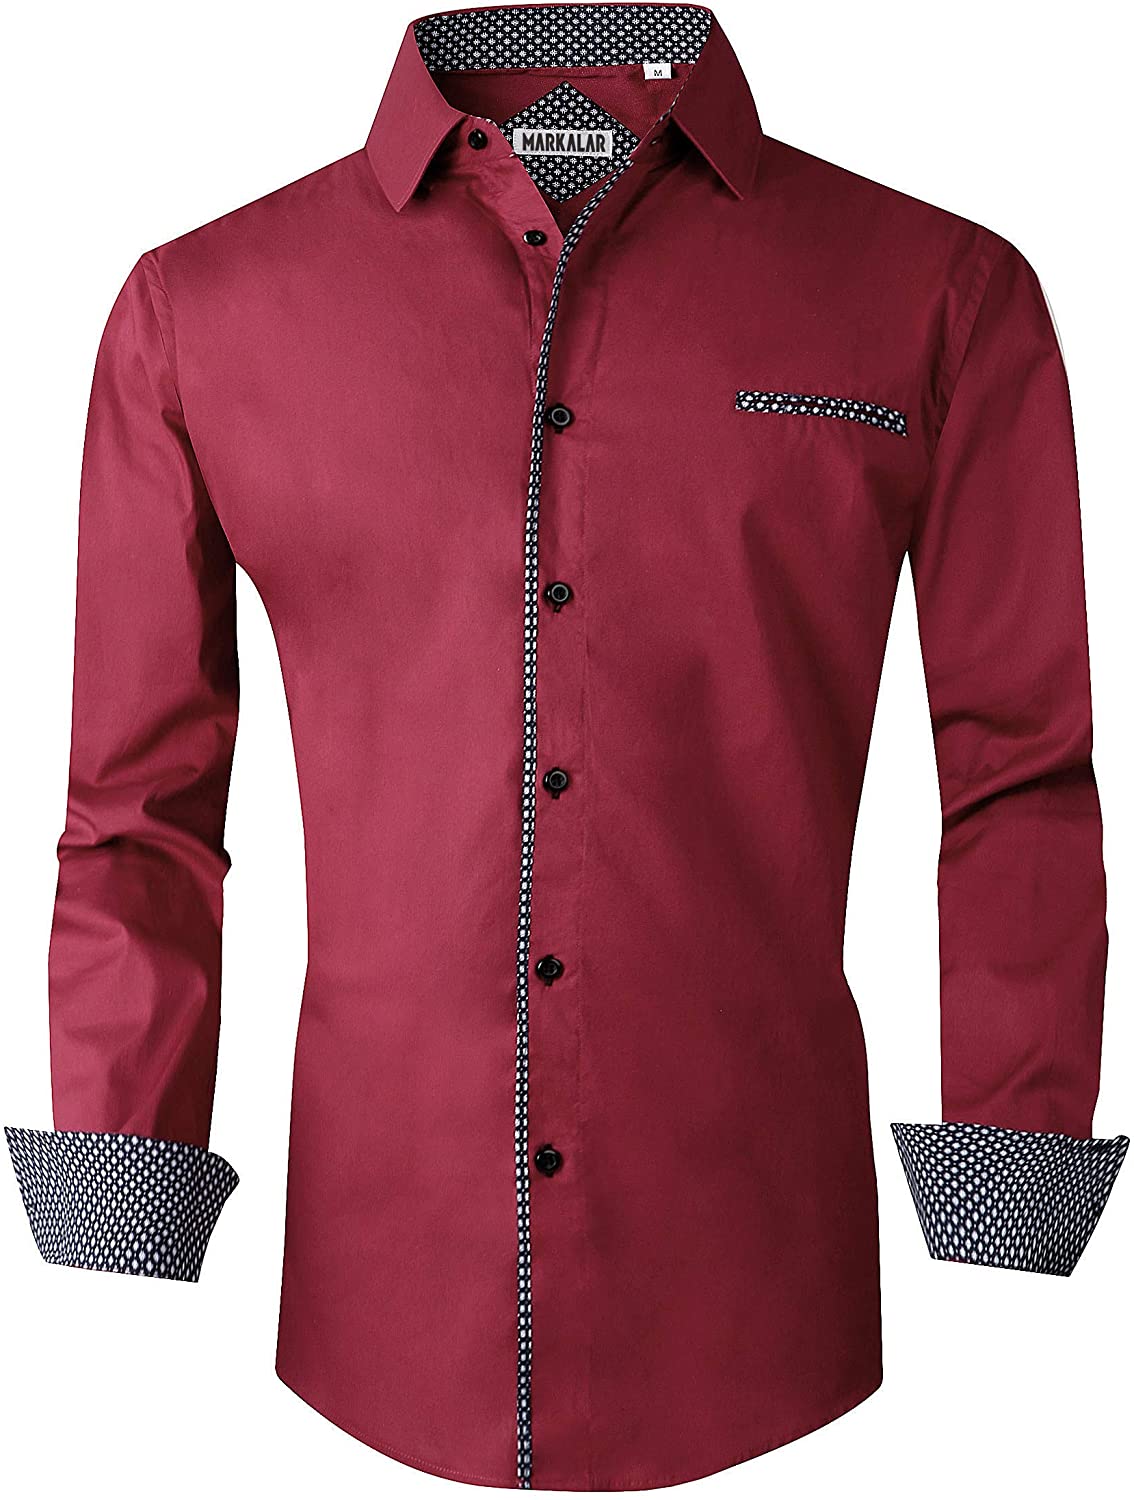 Markalar Mens Casual Button Down Shirts Regular Fit Long Sleeve Cotton Dress Shirt,Red,S